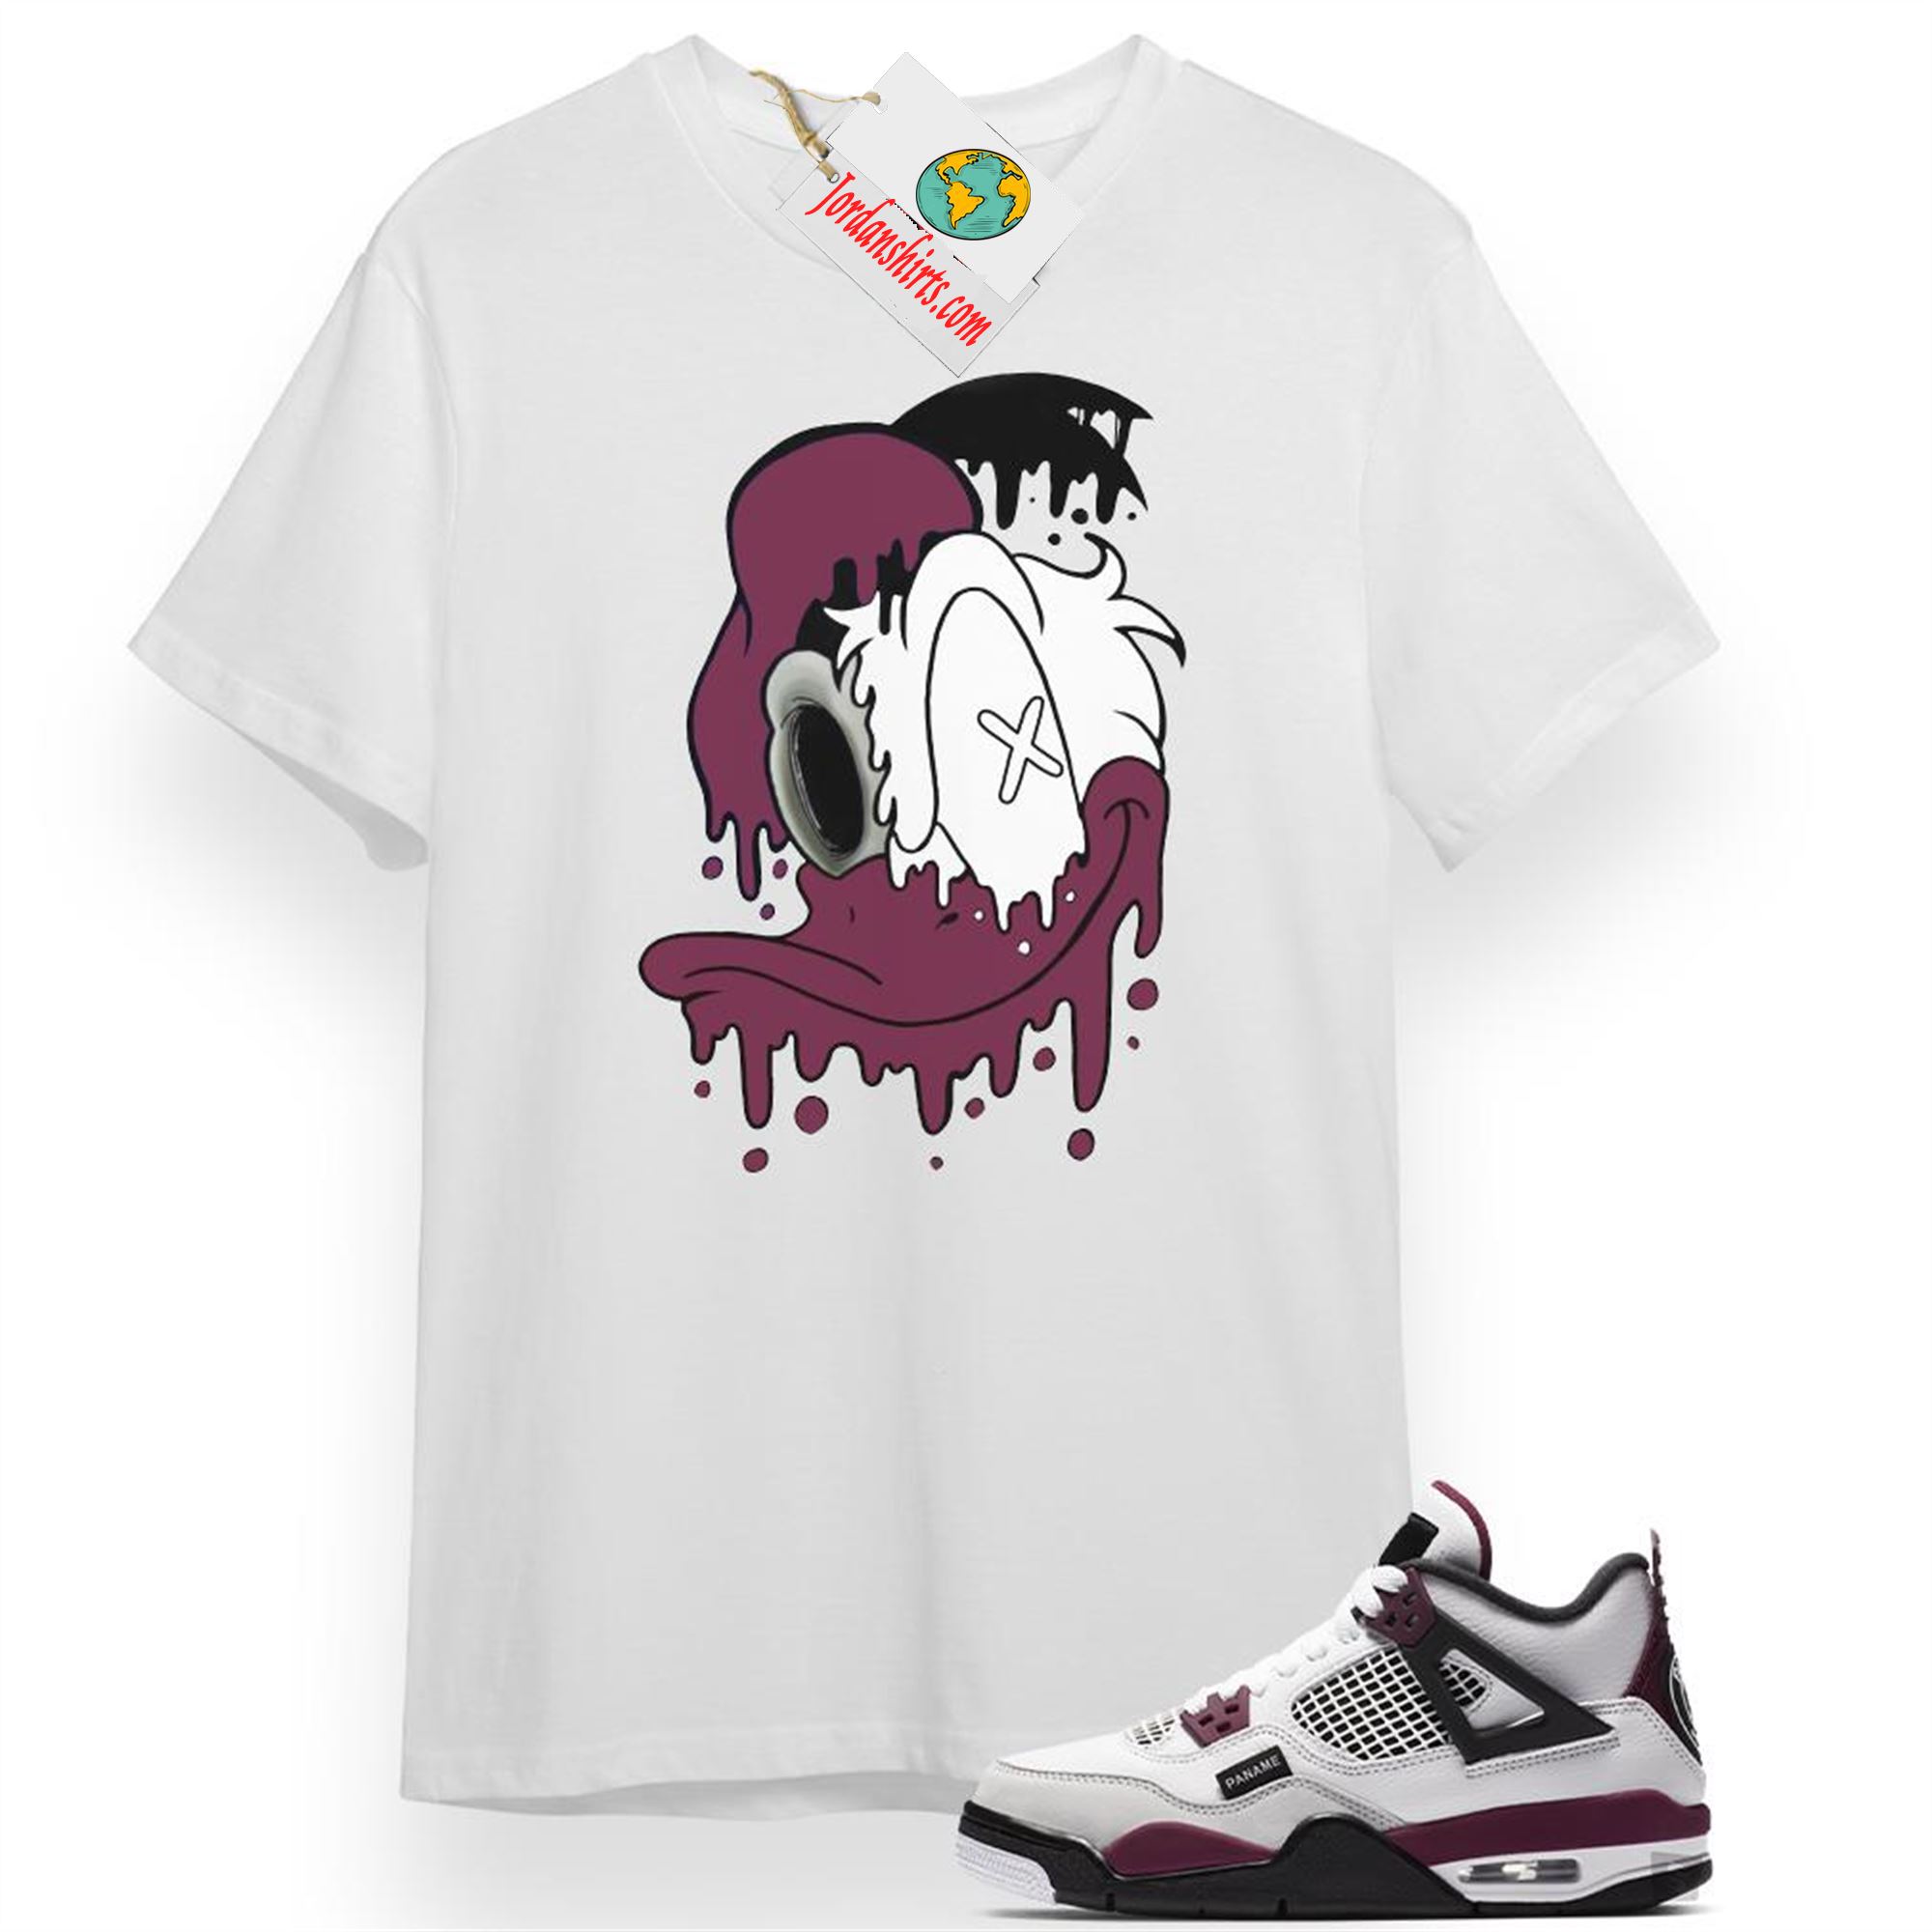 Jordan 4 Shirt, Donald Dripping White T-shirt Air Jordan 4 Psg 4s Full Size Up To 5xl